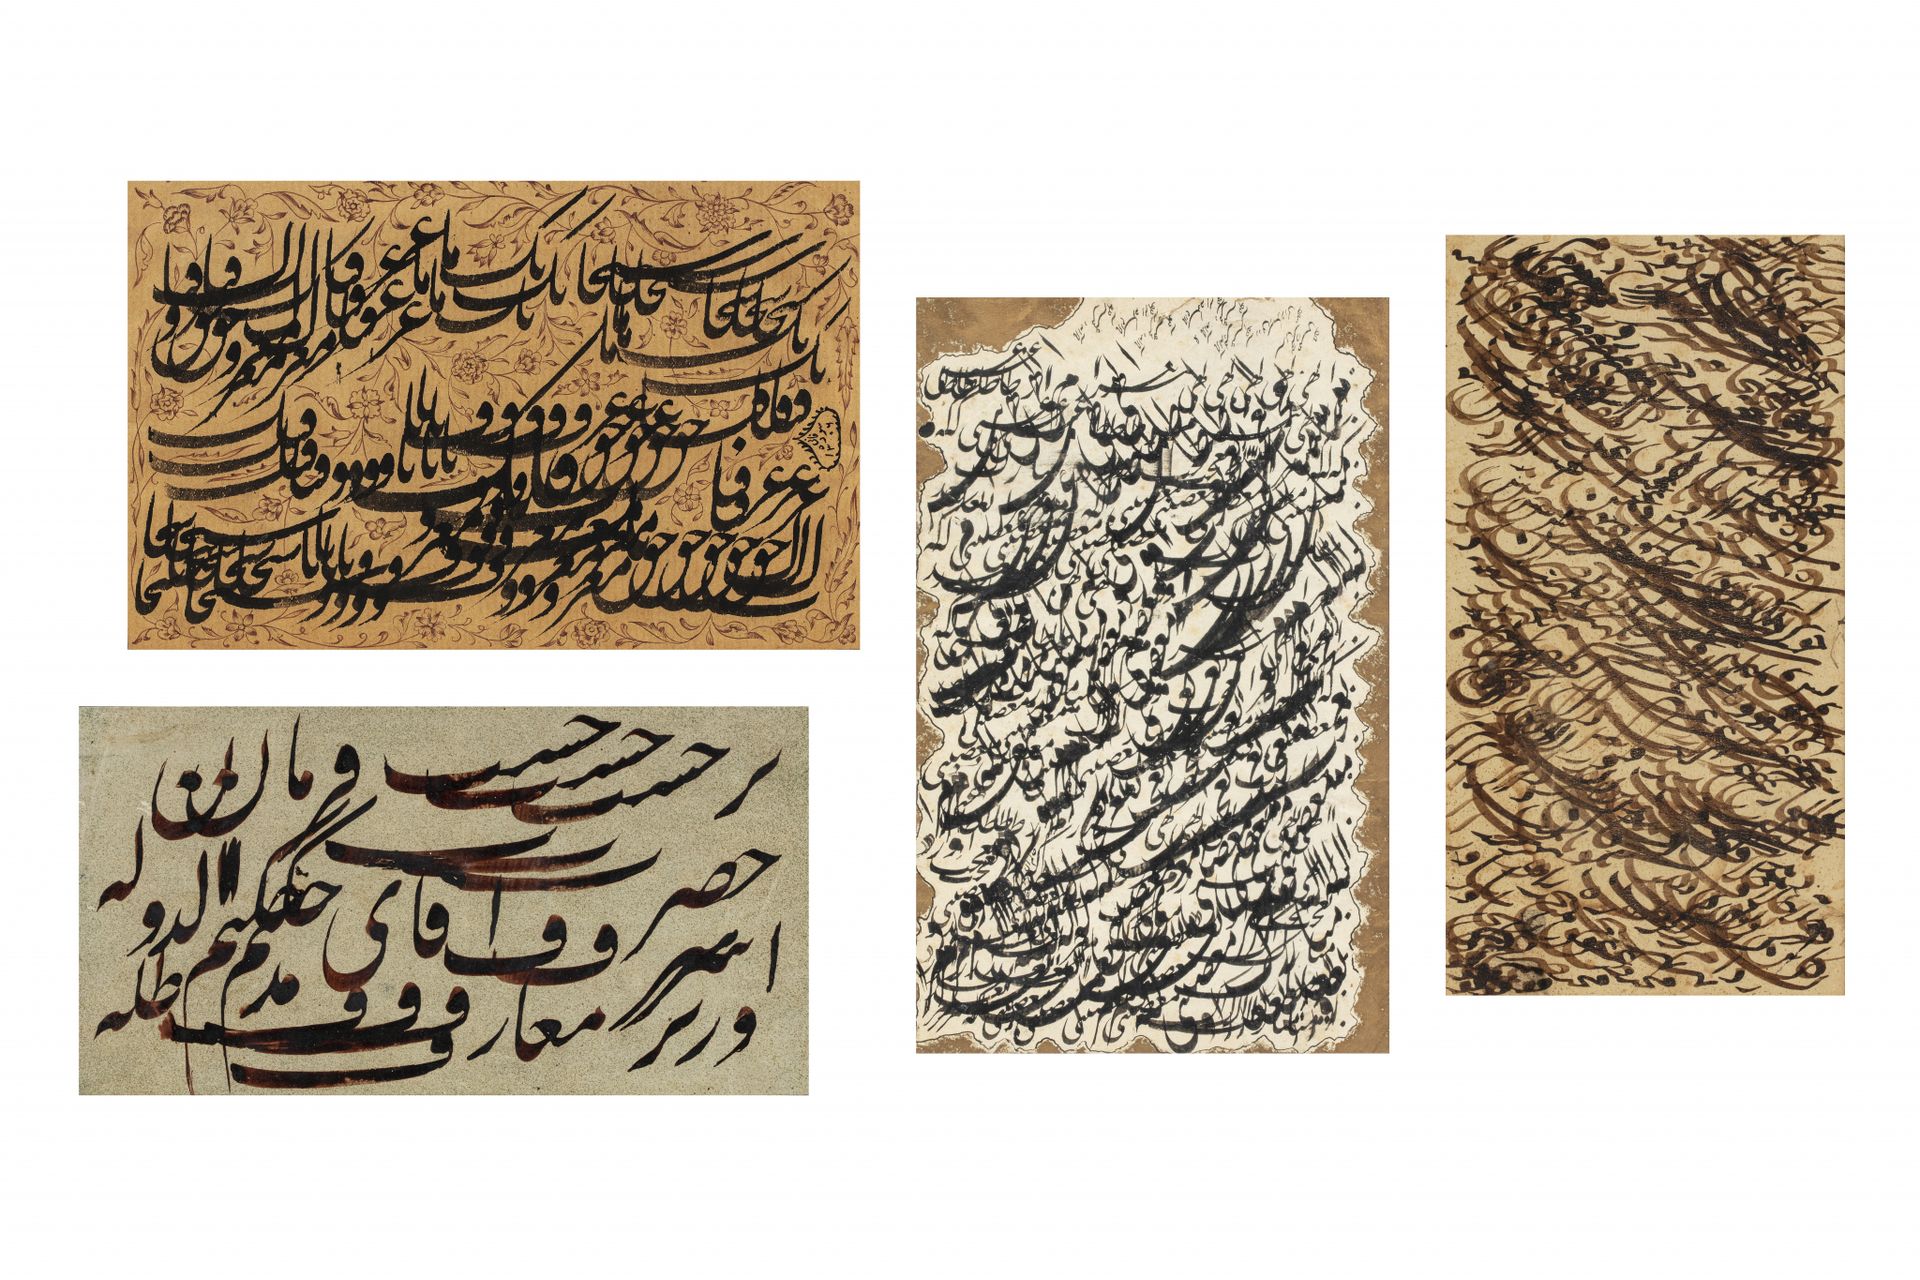 Turquie, fin du XIXe siècle Quattro esercizi calligrafici

Su carta in inchiostr&hellip;